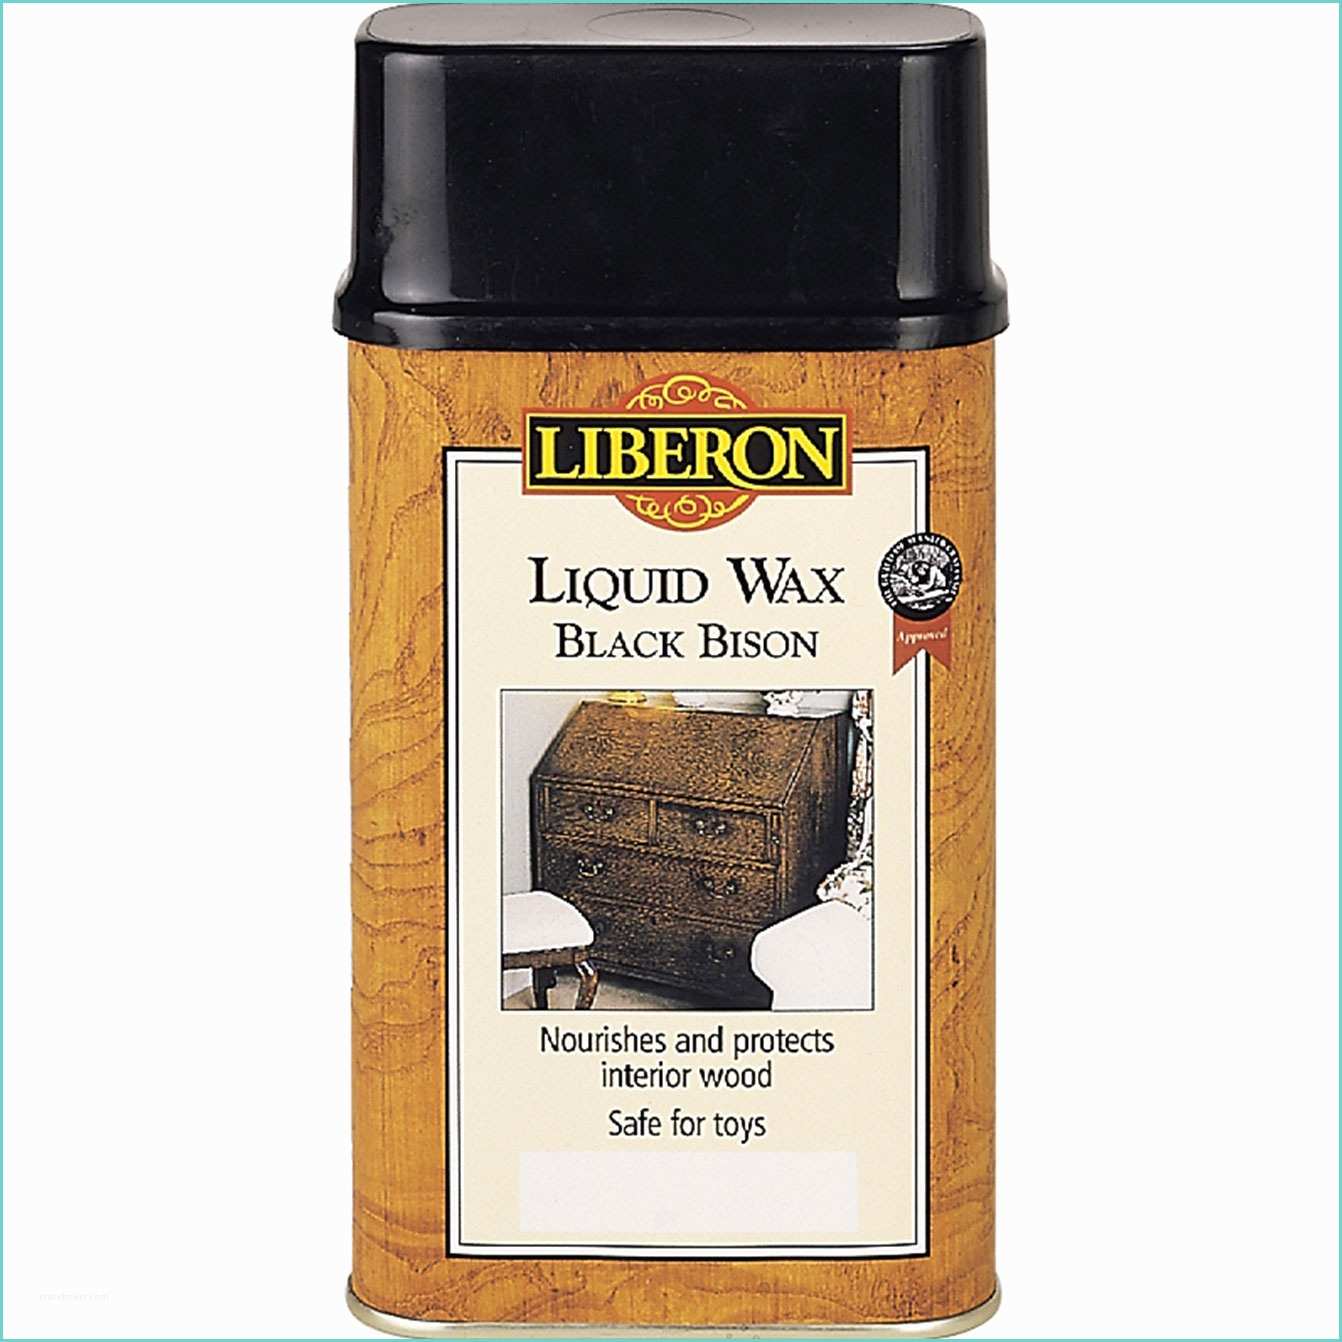 Liberon Black Bison Liberon Black Bison Liquid Wax